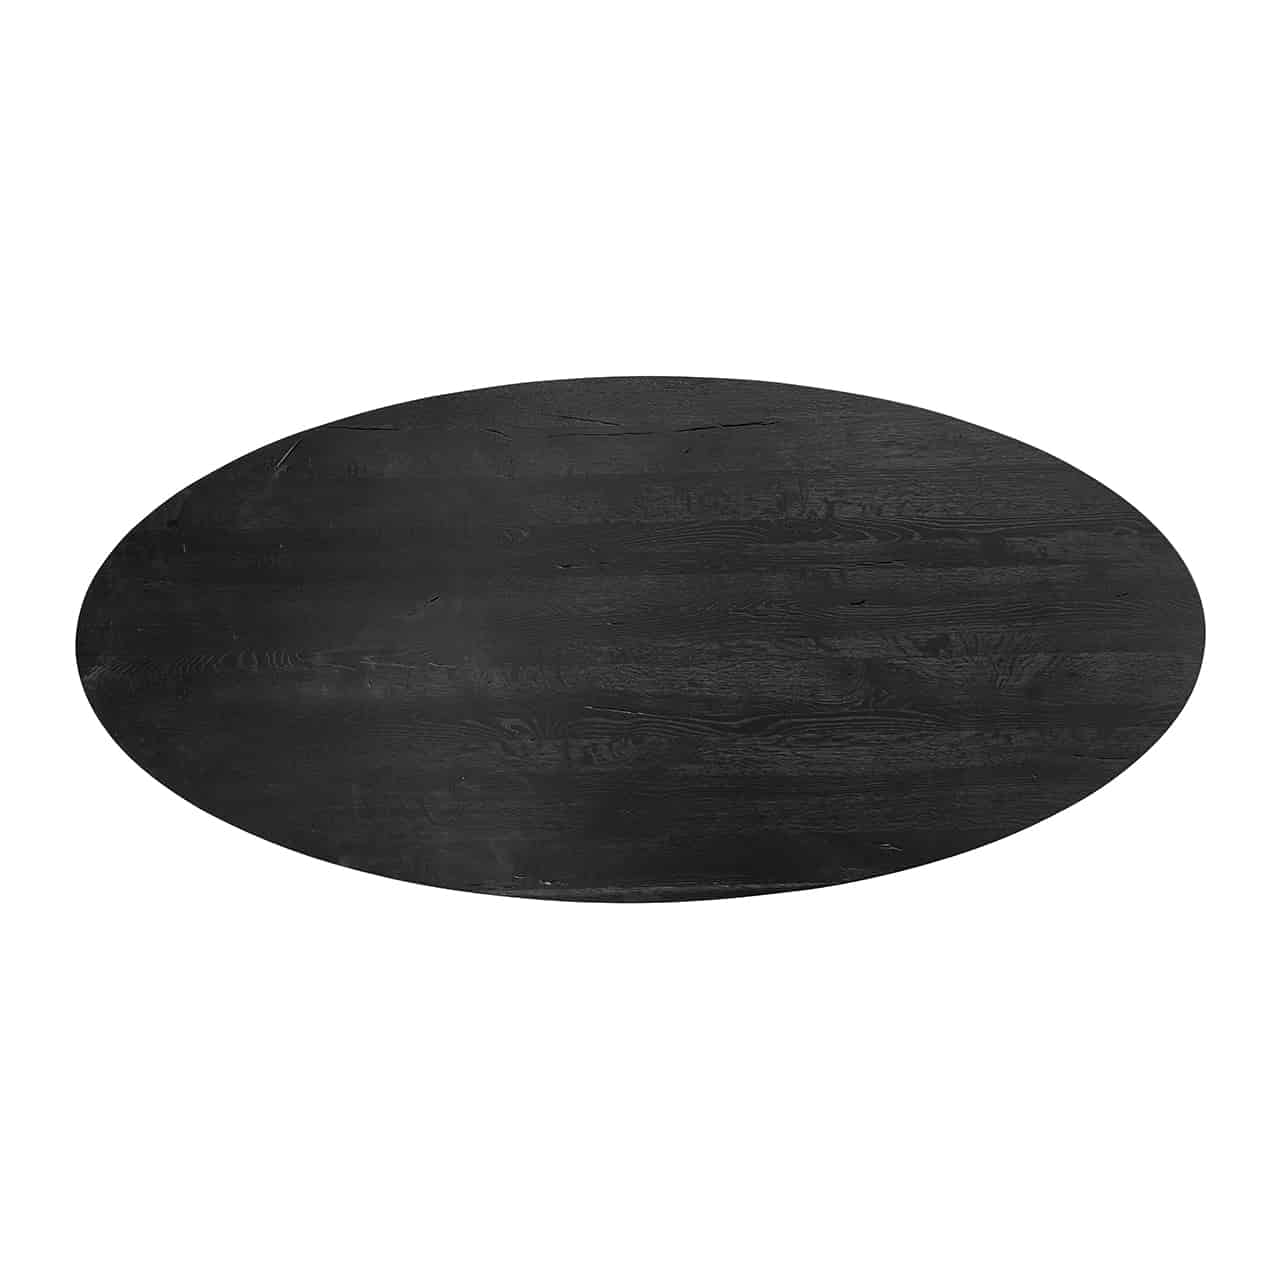 Große, ovale Tischplatte in schwarz.